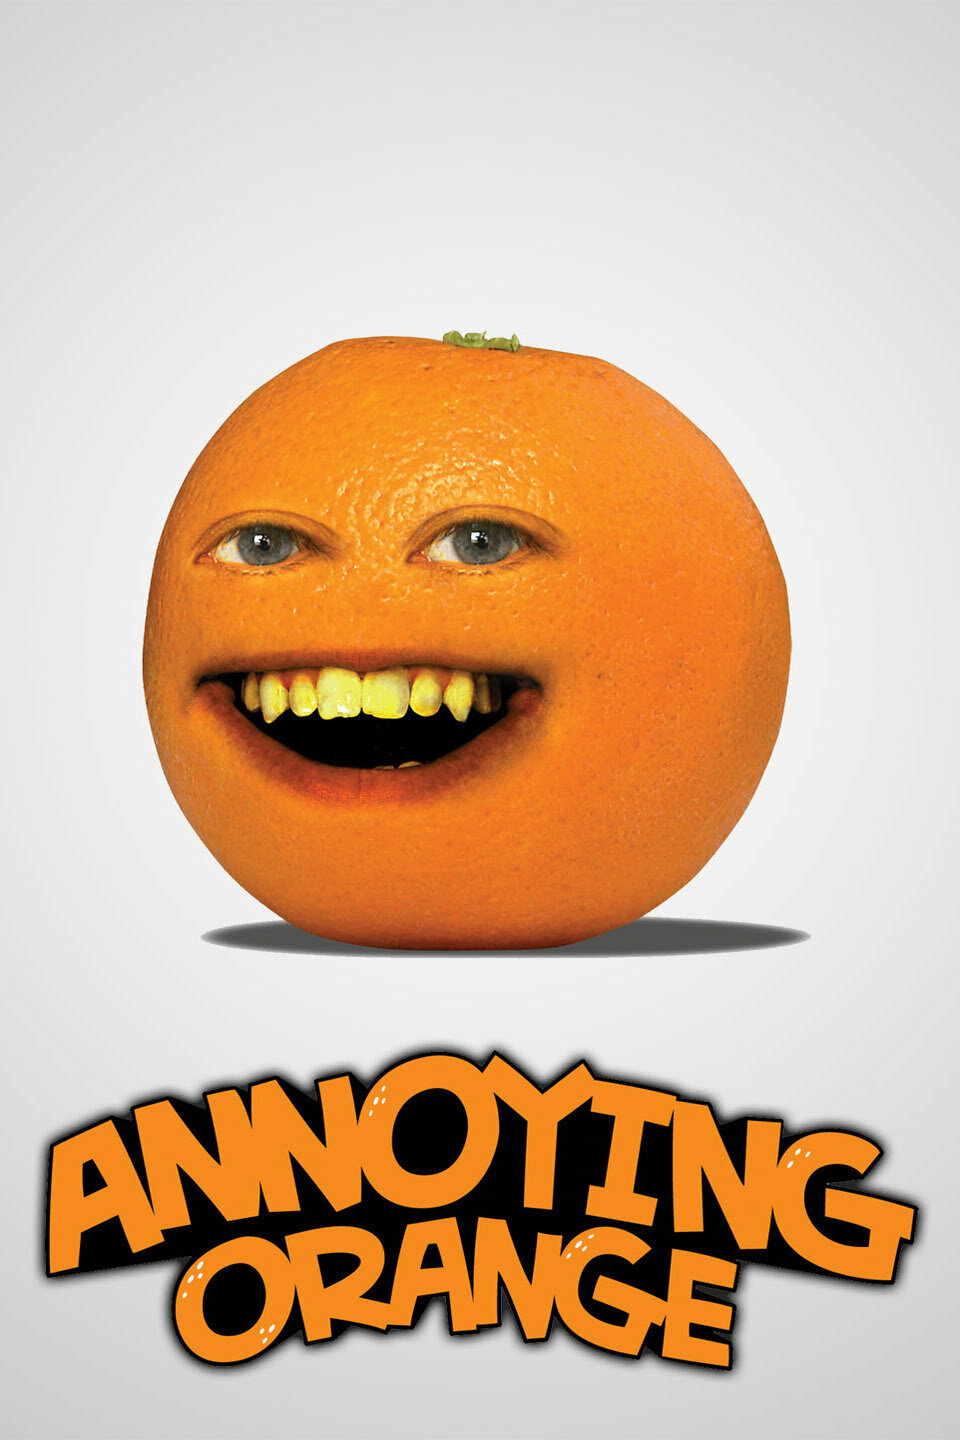 The Annoying Orange ne zaman